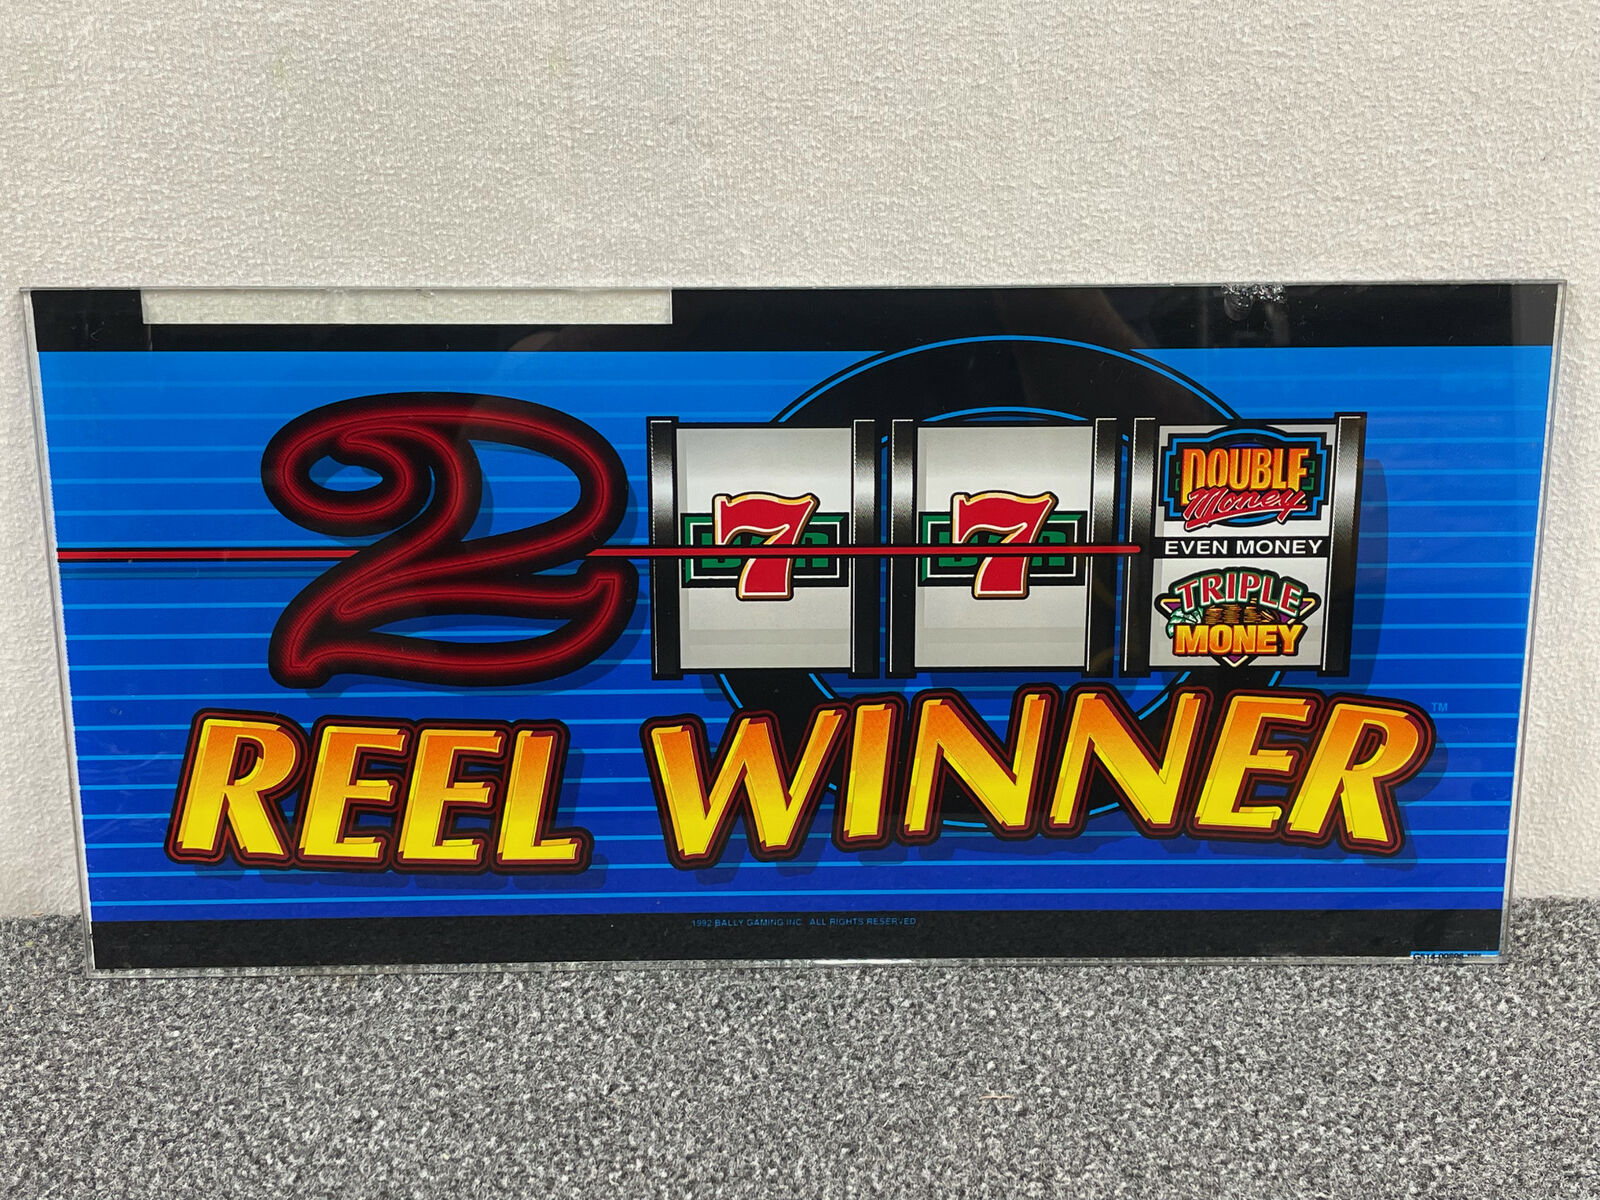 Bally 2 Reel Winner Slot Machine Arcade Game Backglass Marquee Header Panel 1992